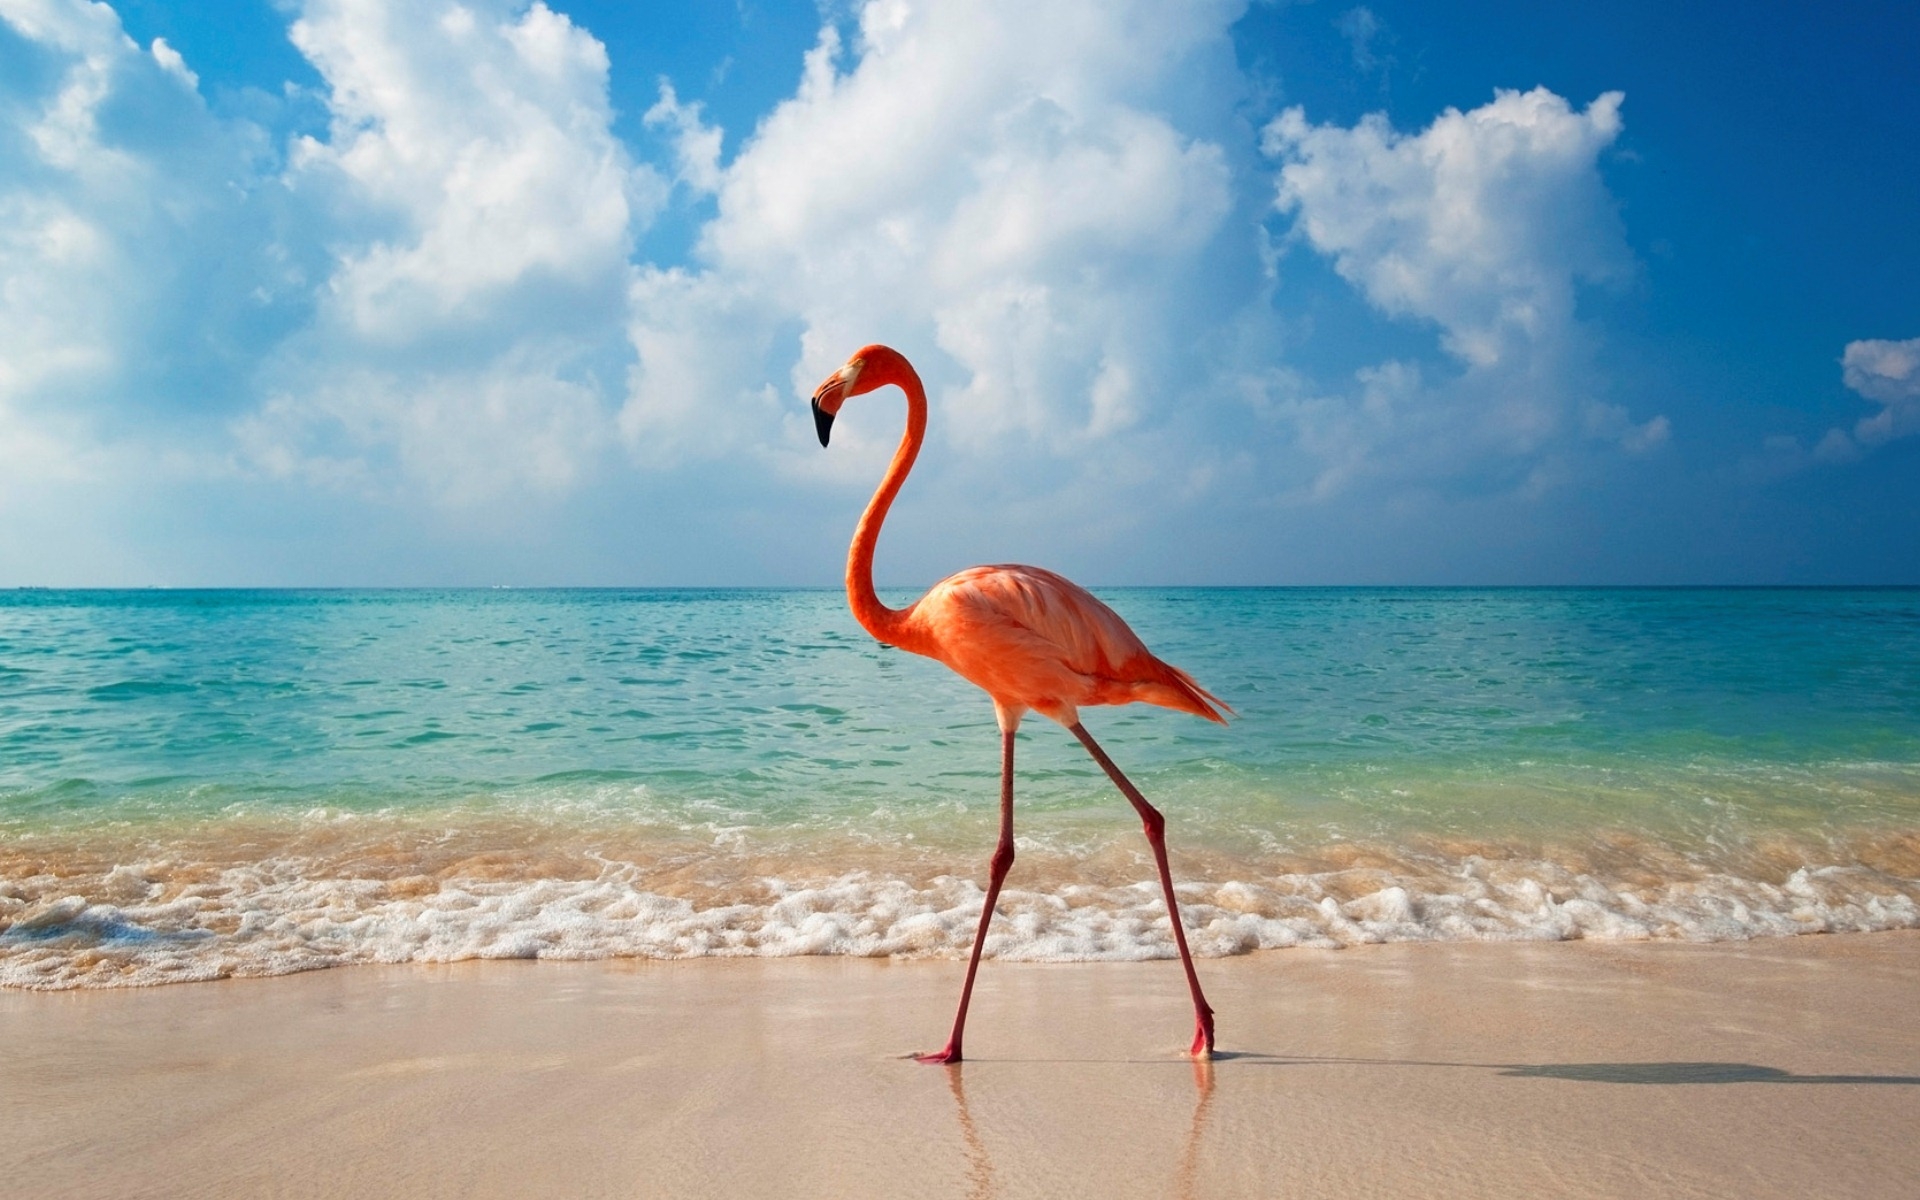 379522 descargar imagen flamenco, playa, animales, ave, horizonte, océano, aves: fondos de pantalla y protectores de pantalla gratis